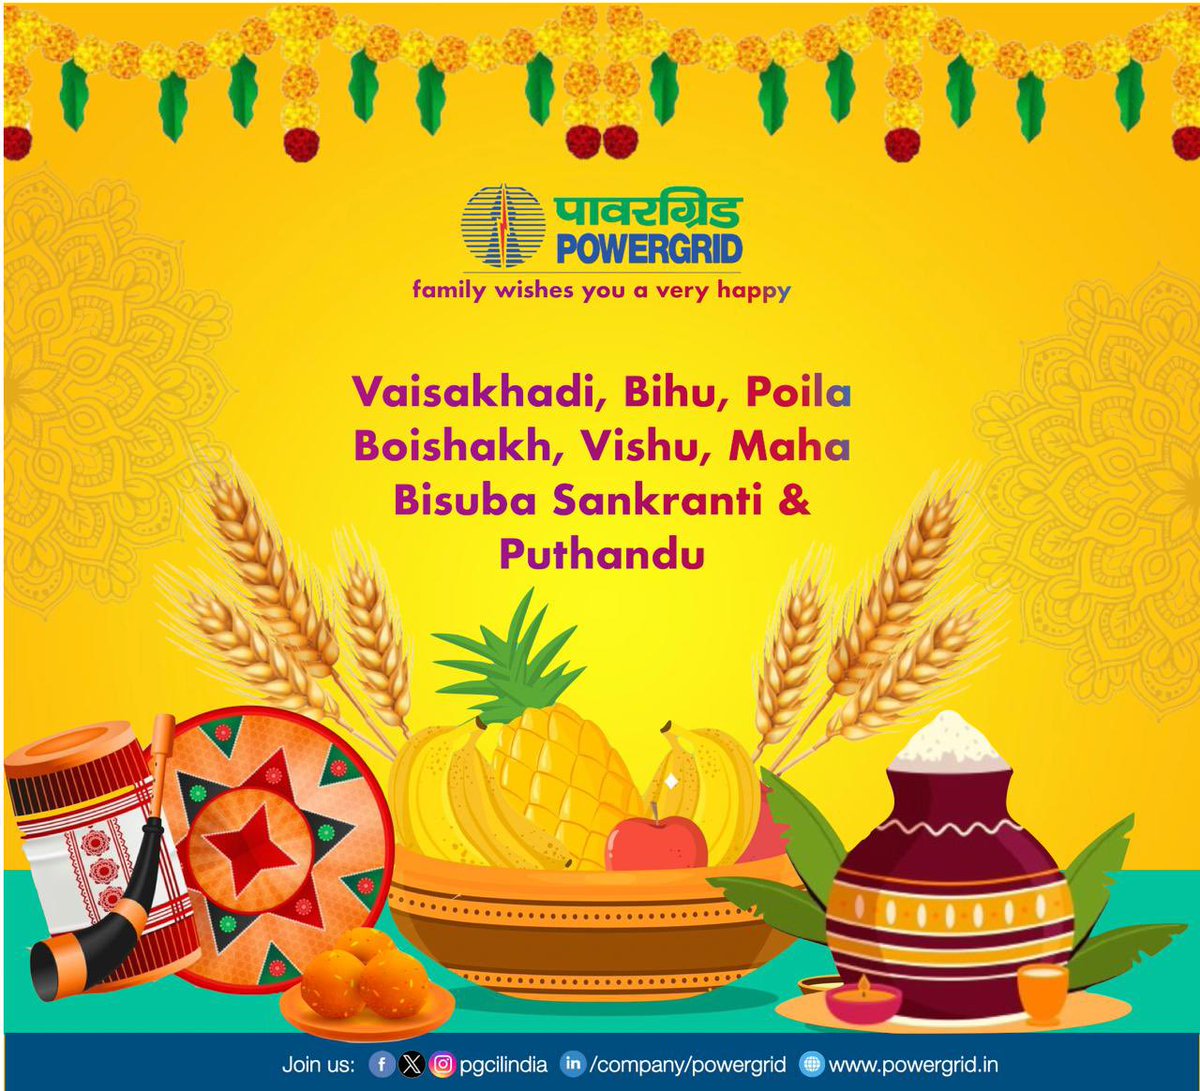 POWERGRID family wishes you a joyous Vaisakhadi, Bihu, Poila Boishakh, Vishu, Maha Bisuba Sankranti, and Puthandu!